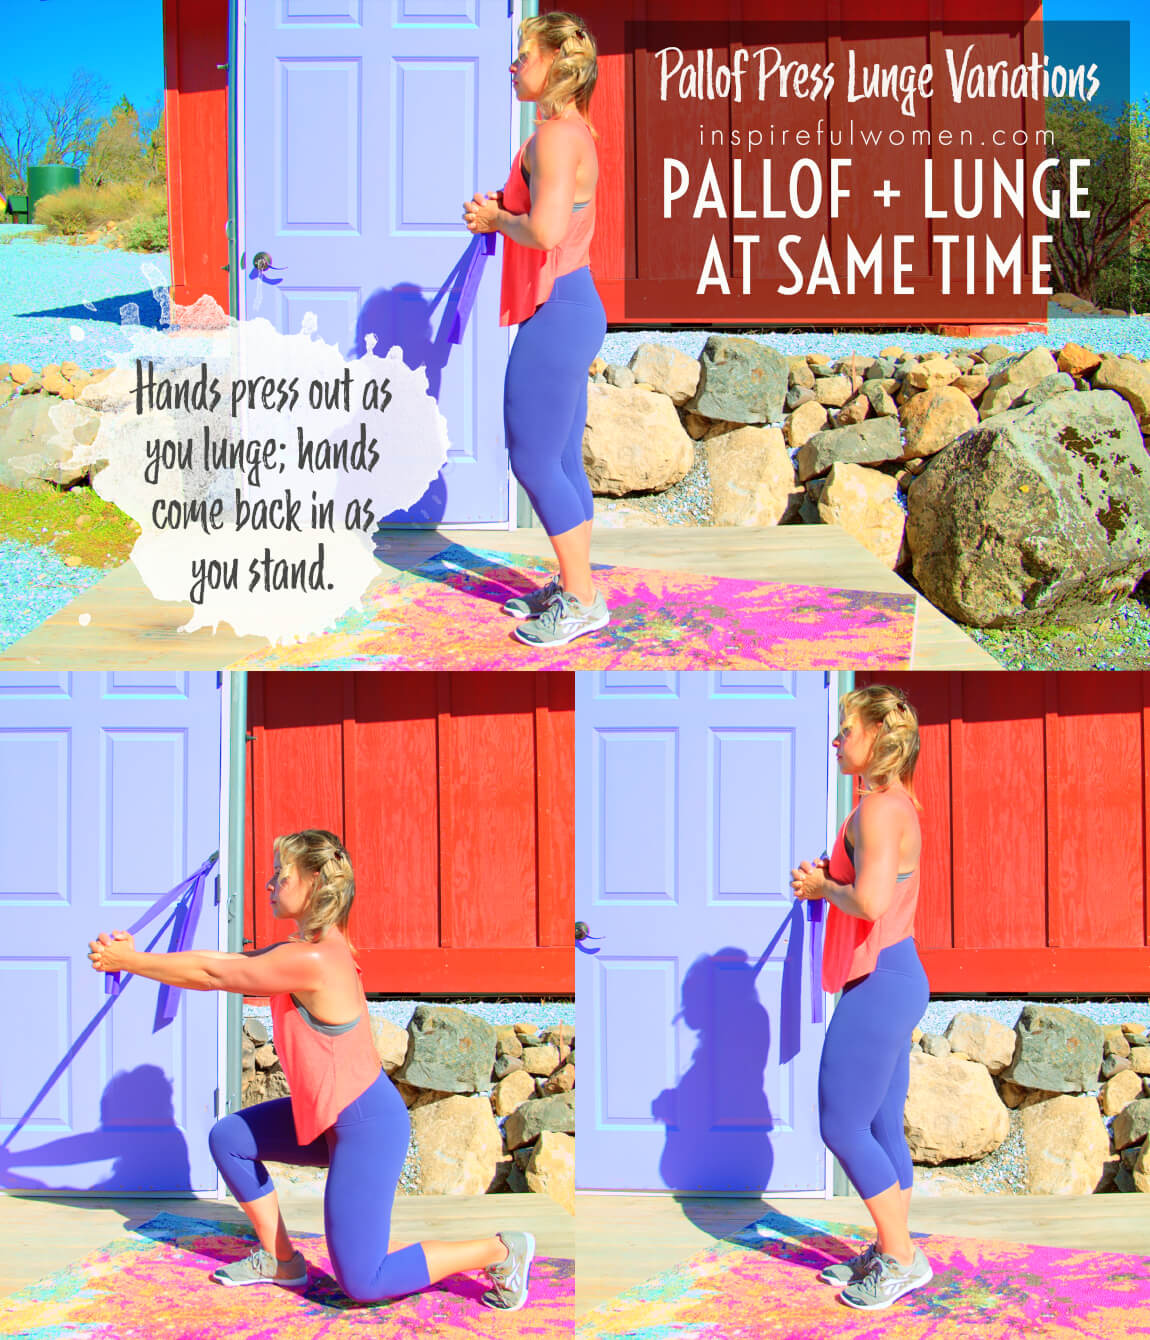 palloff-lunge-at-same-time-antii-rotation-press-variation